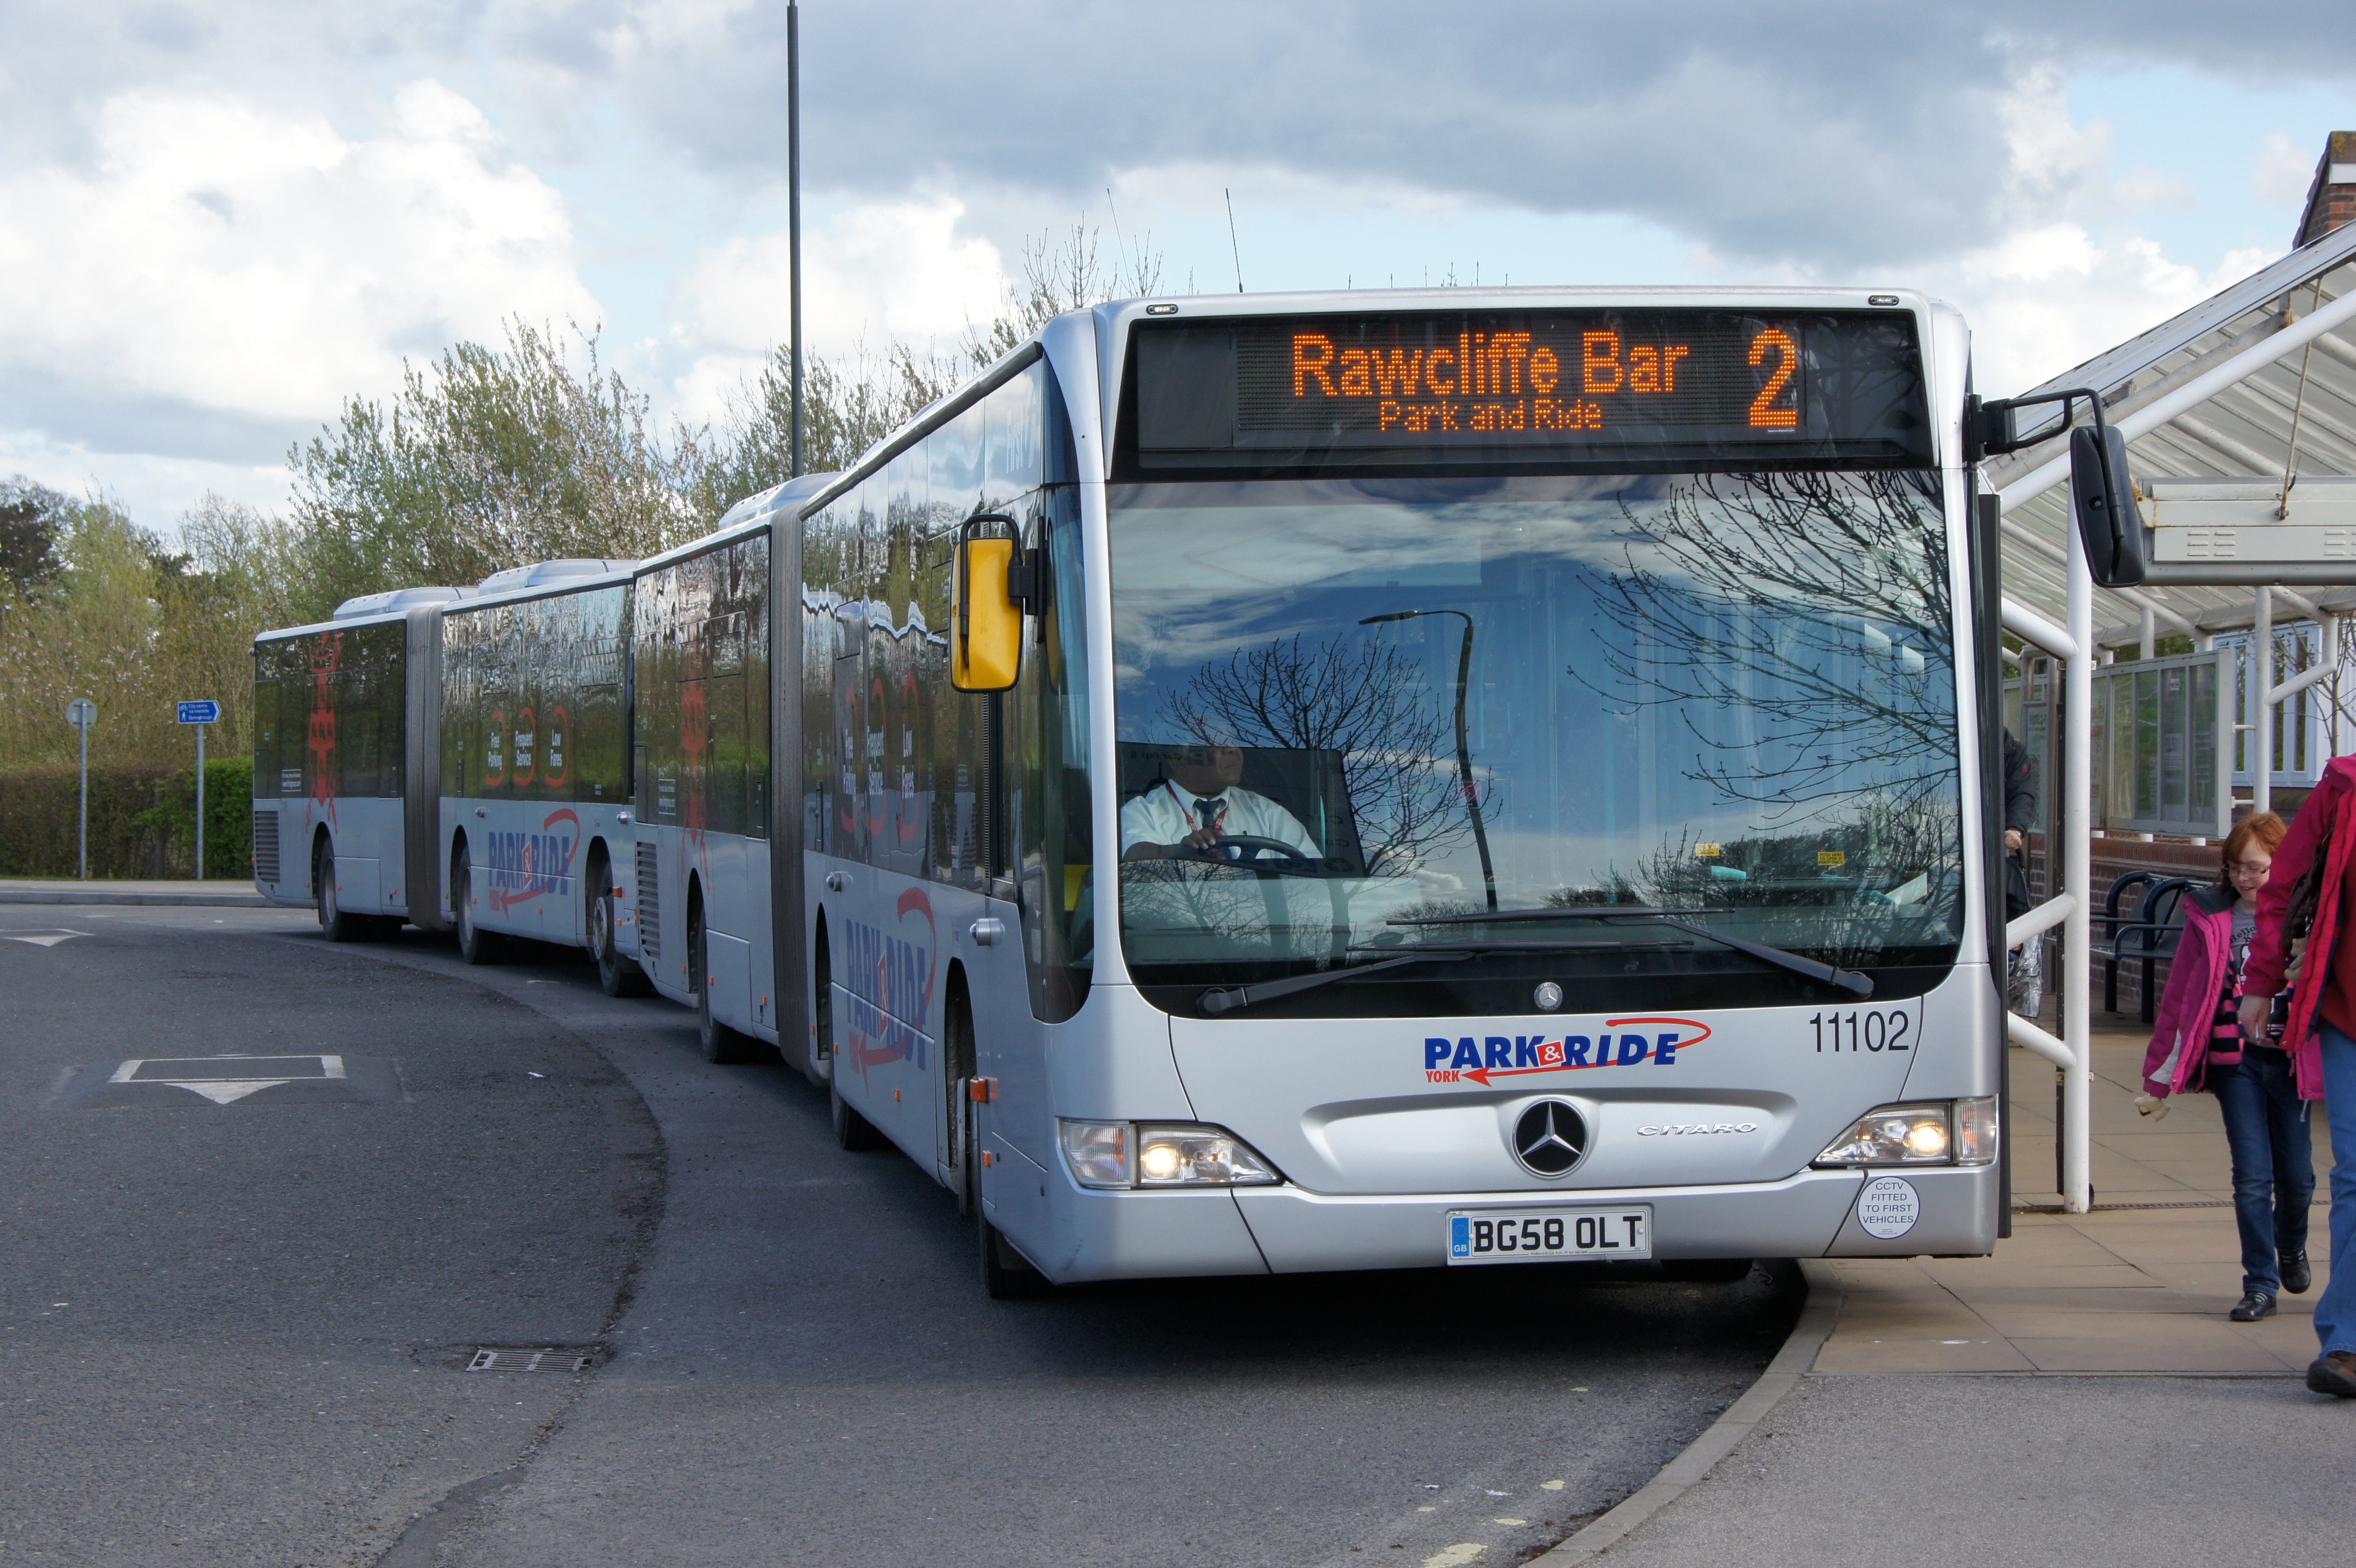 File:First York bus 11102 (BG58 OLT), 10 April 2012.jpg - Wikipedia